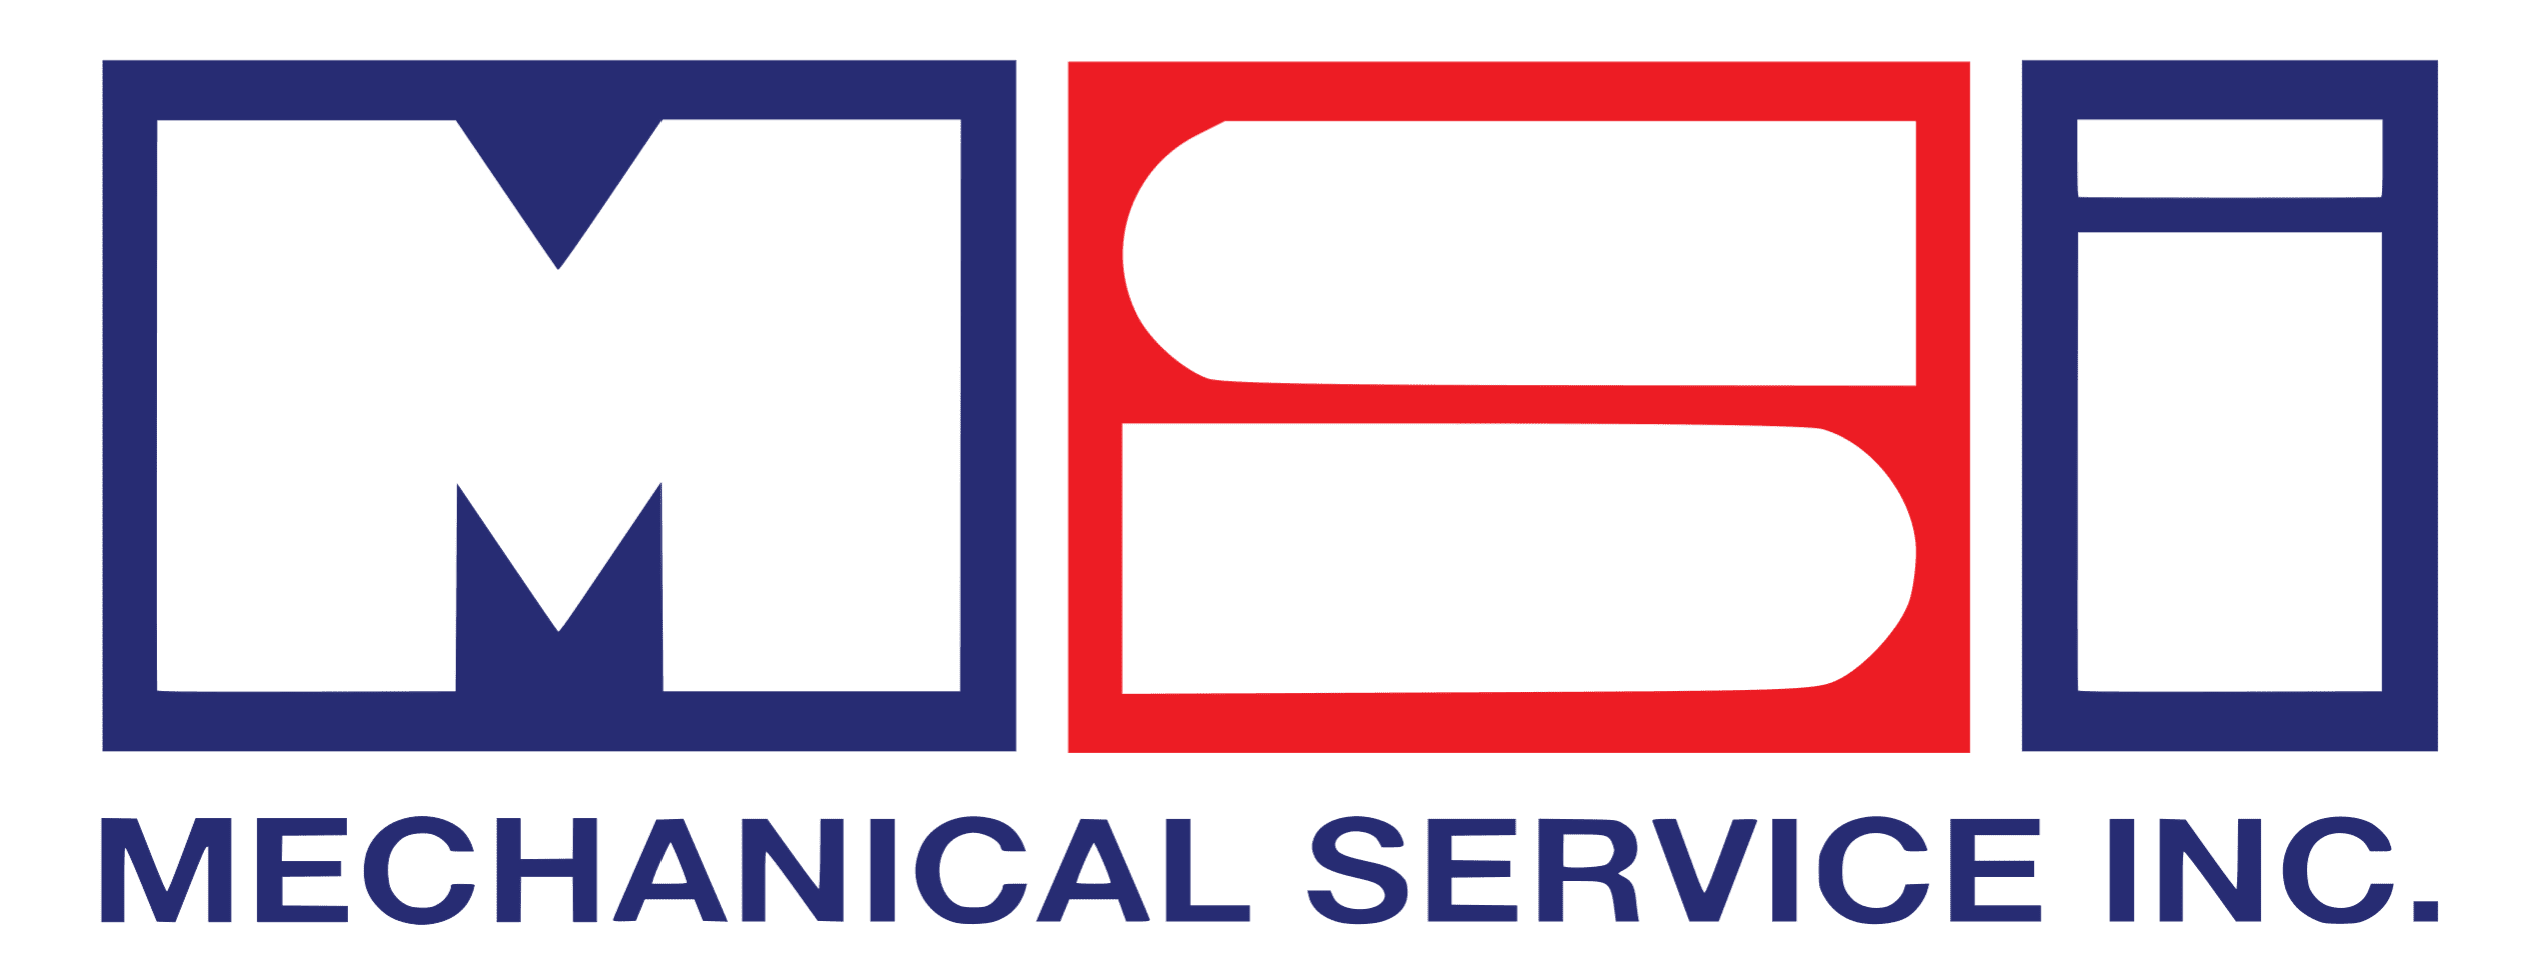 Mechanical Service, Inc. (MSI) - GPCSA Member